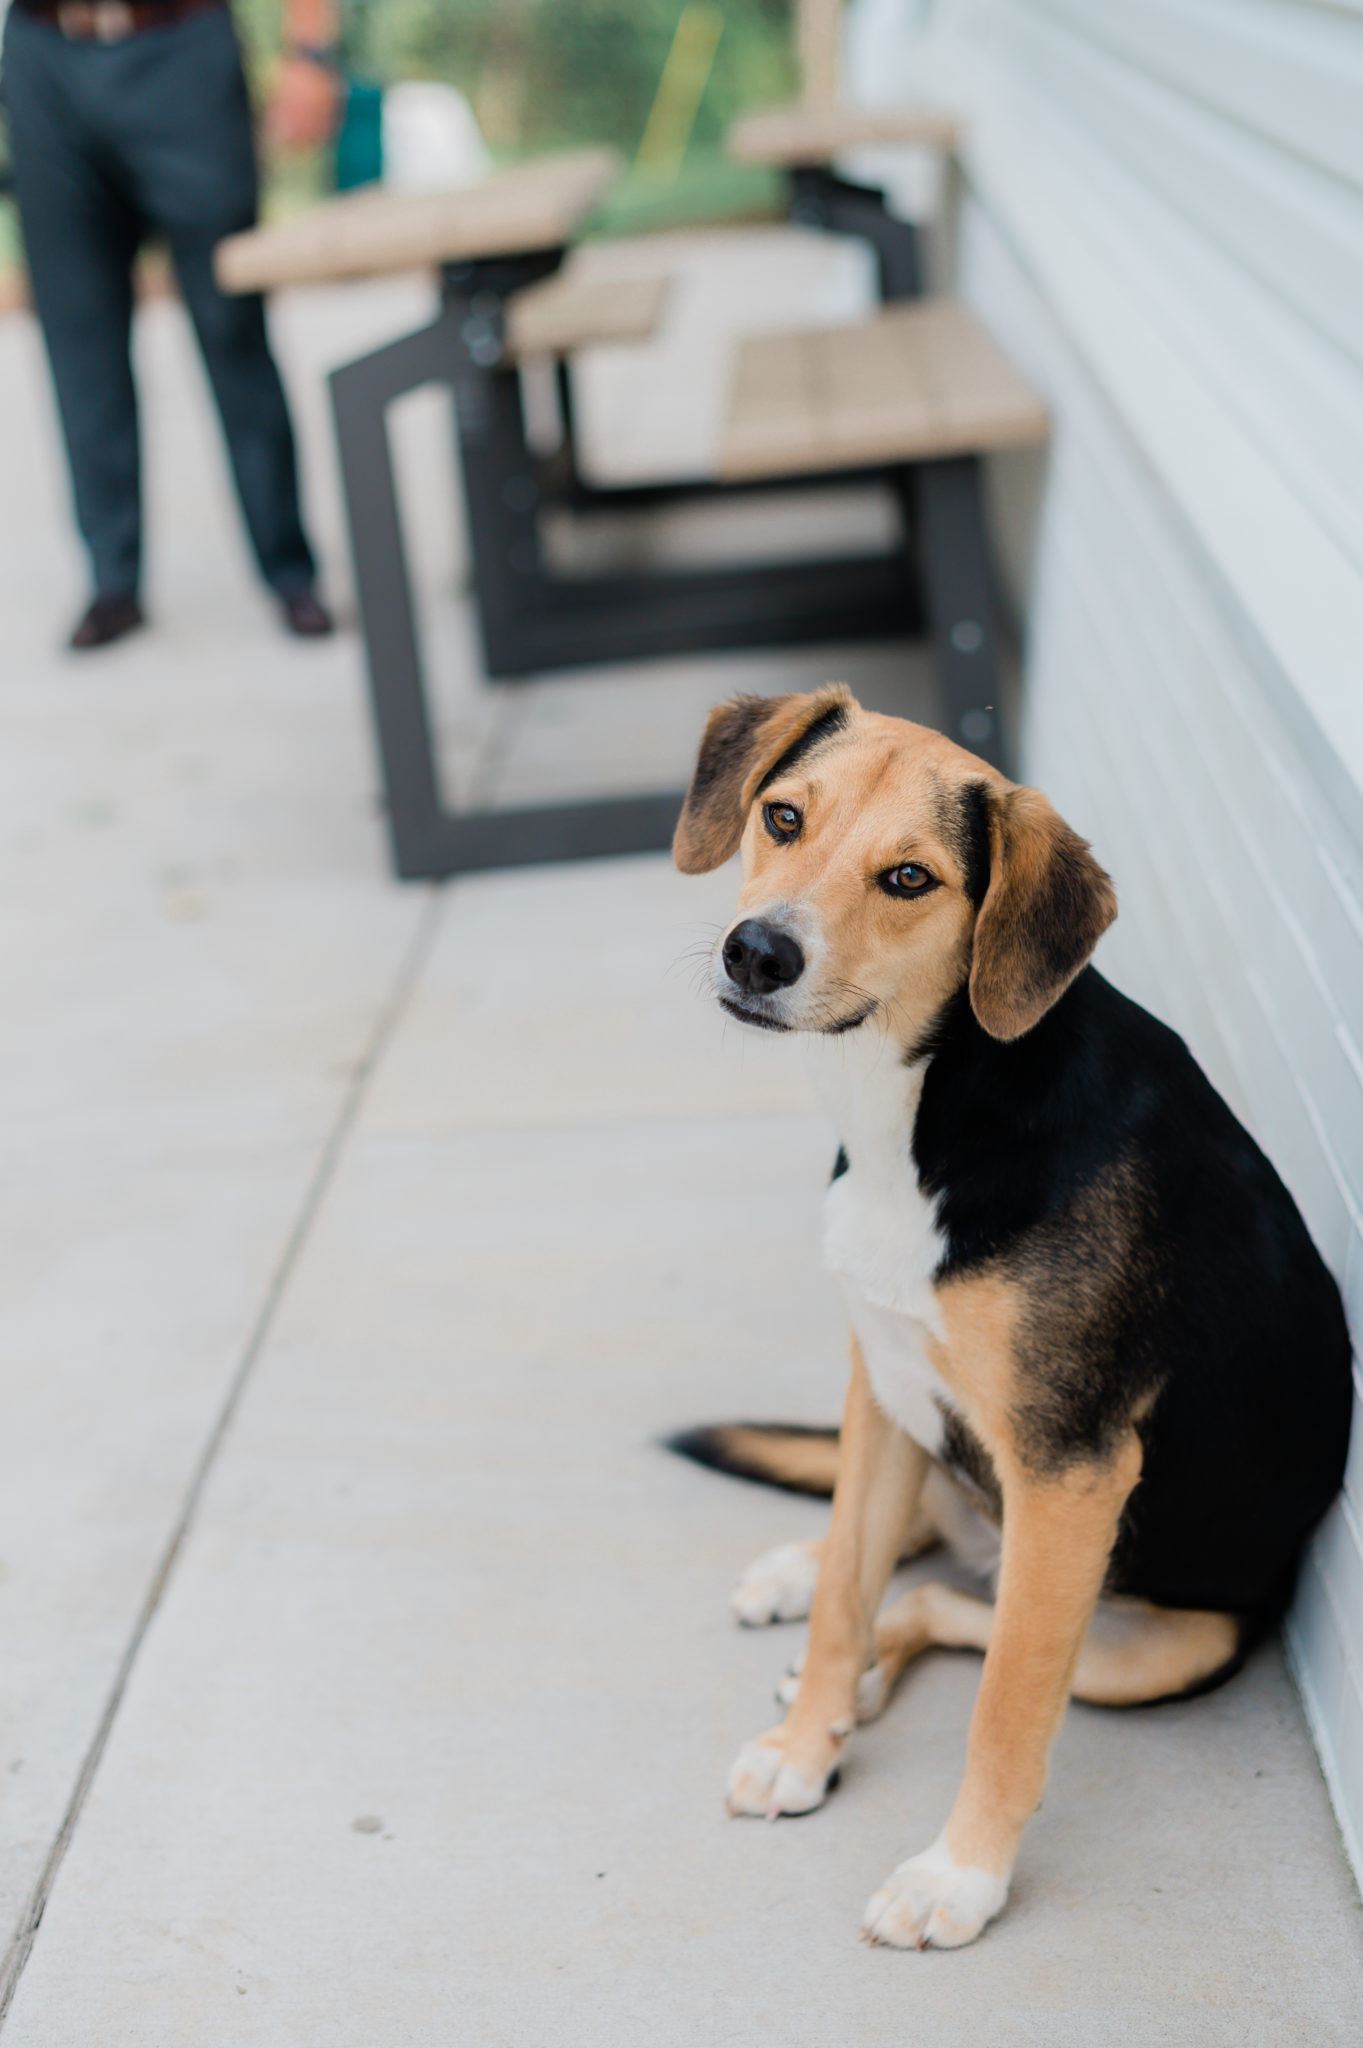 A beagle looks at the camera.